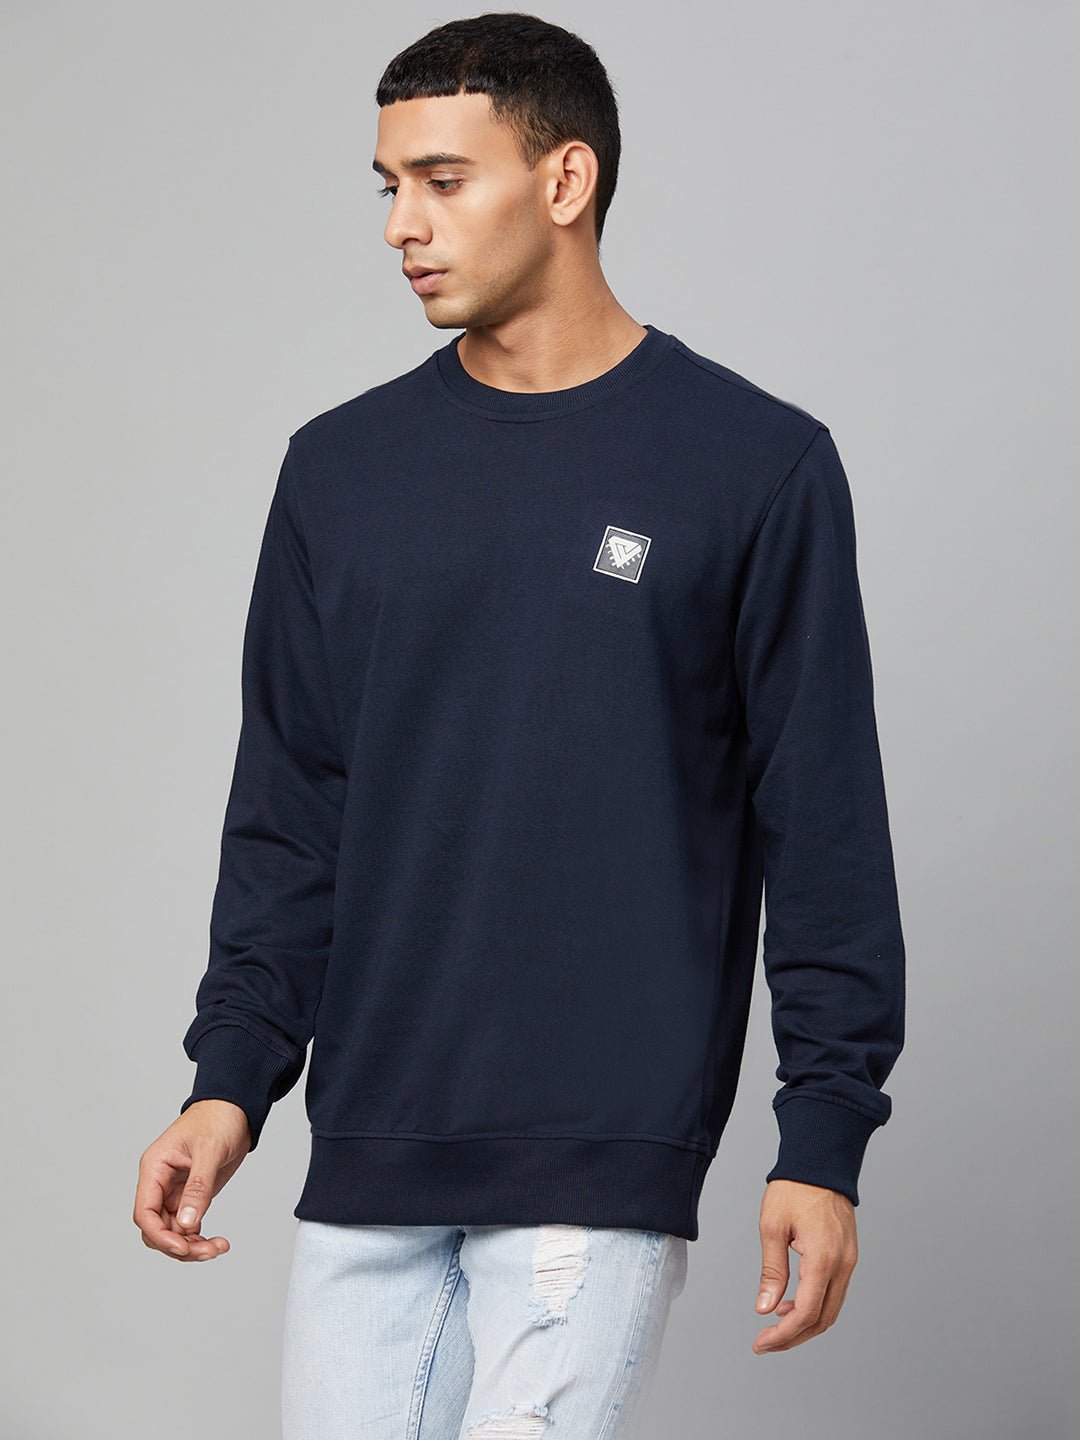 Navy Blue Sweatshirt - clubyork